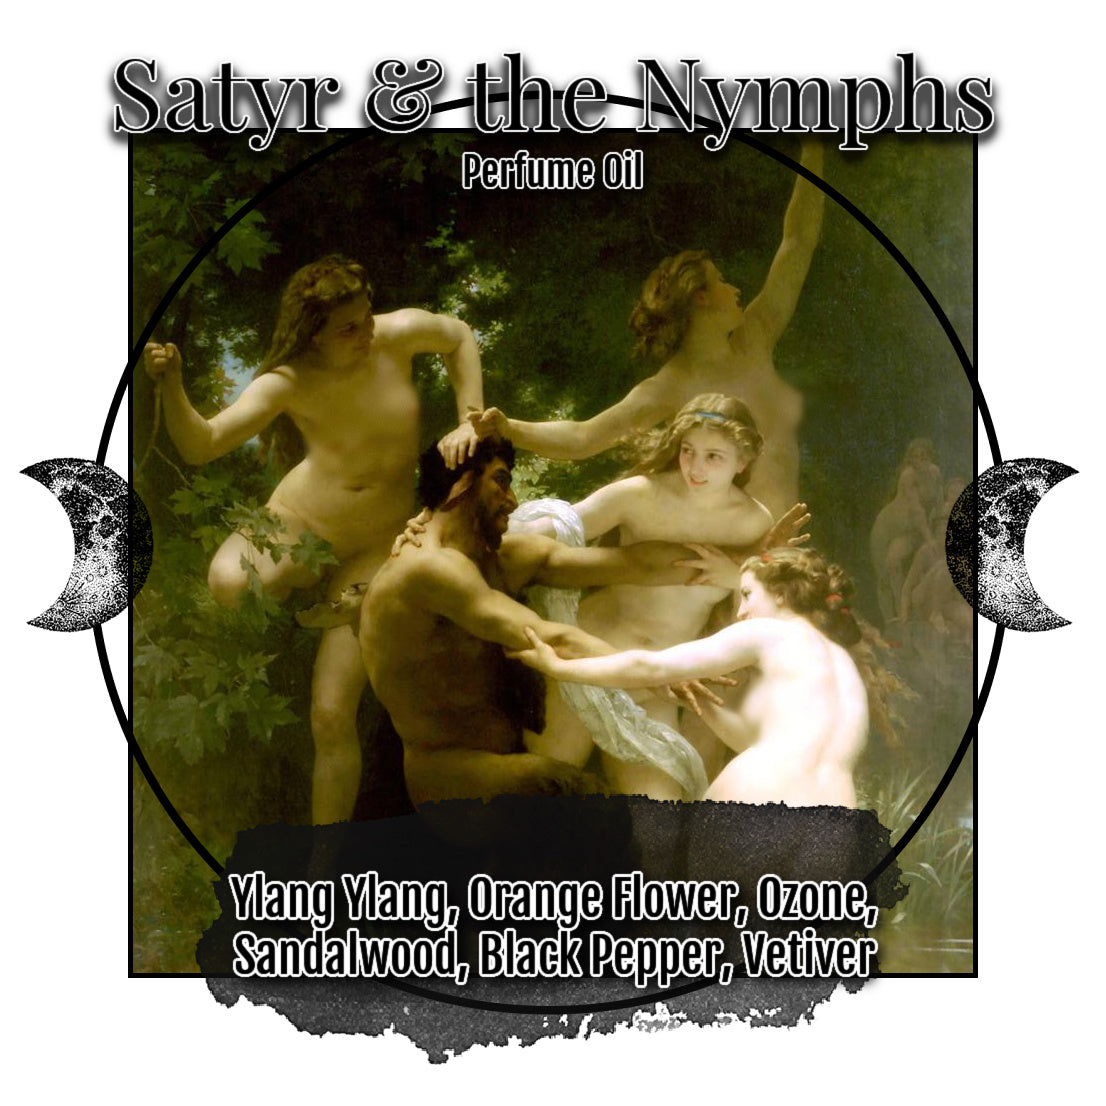 "Satyr & the Nymphs" - Ylang Ylang, Orange Flower, Ozone, Sandalwood, Black Pepper, Vetiver